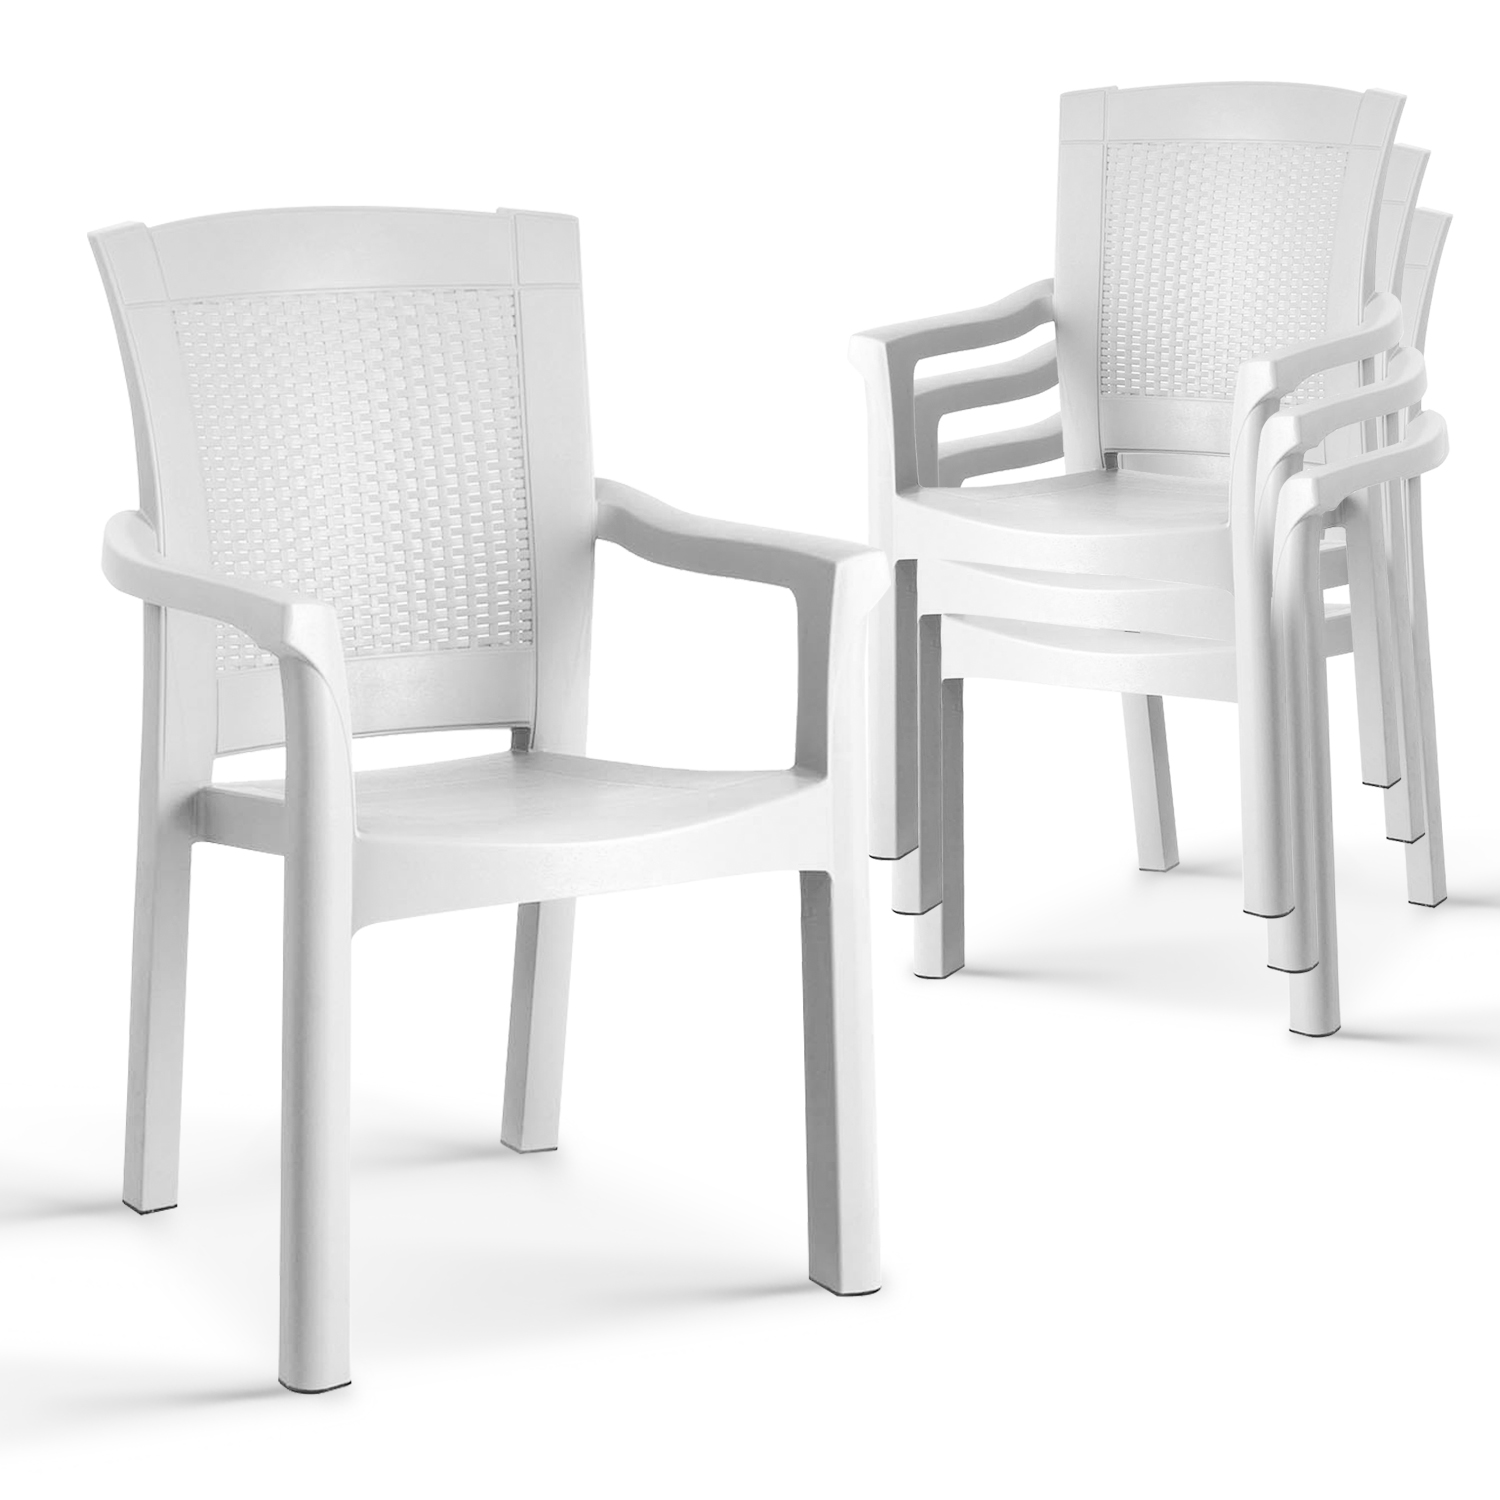 Bahex Ela B Rattan Kollu Bahçe Sandalyesi Koltuk 4 Adet Beyaz